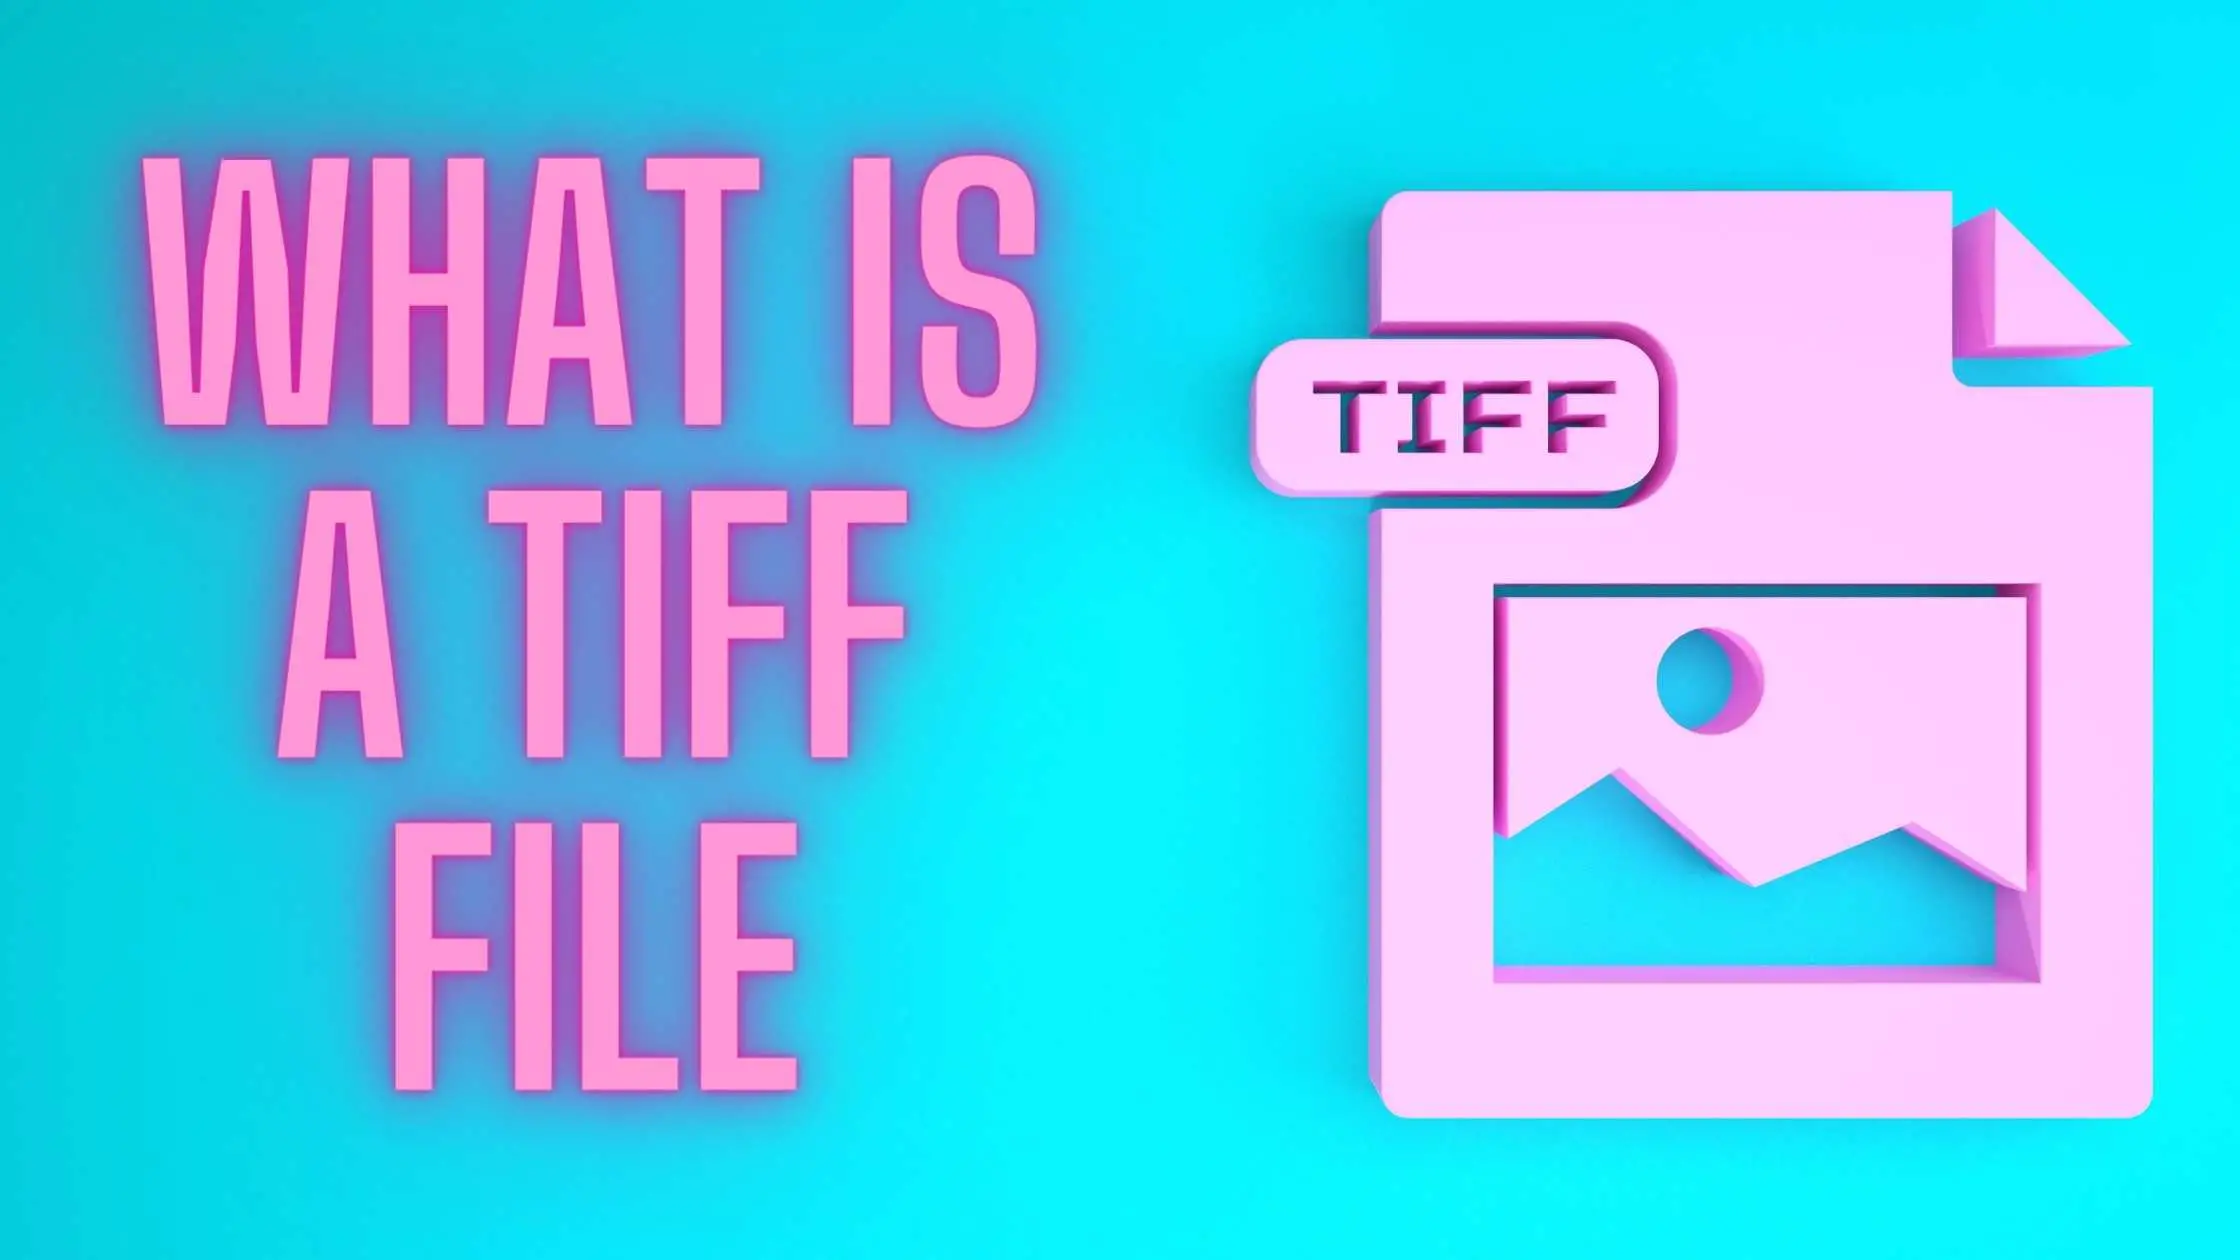 TIFF картинки. Фотографии TIFF. Сжать файл TIFF. Как снизить вес тифф файла. Сжатый tiff